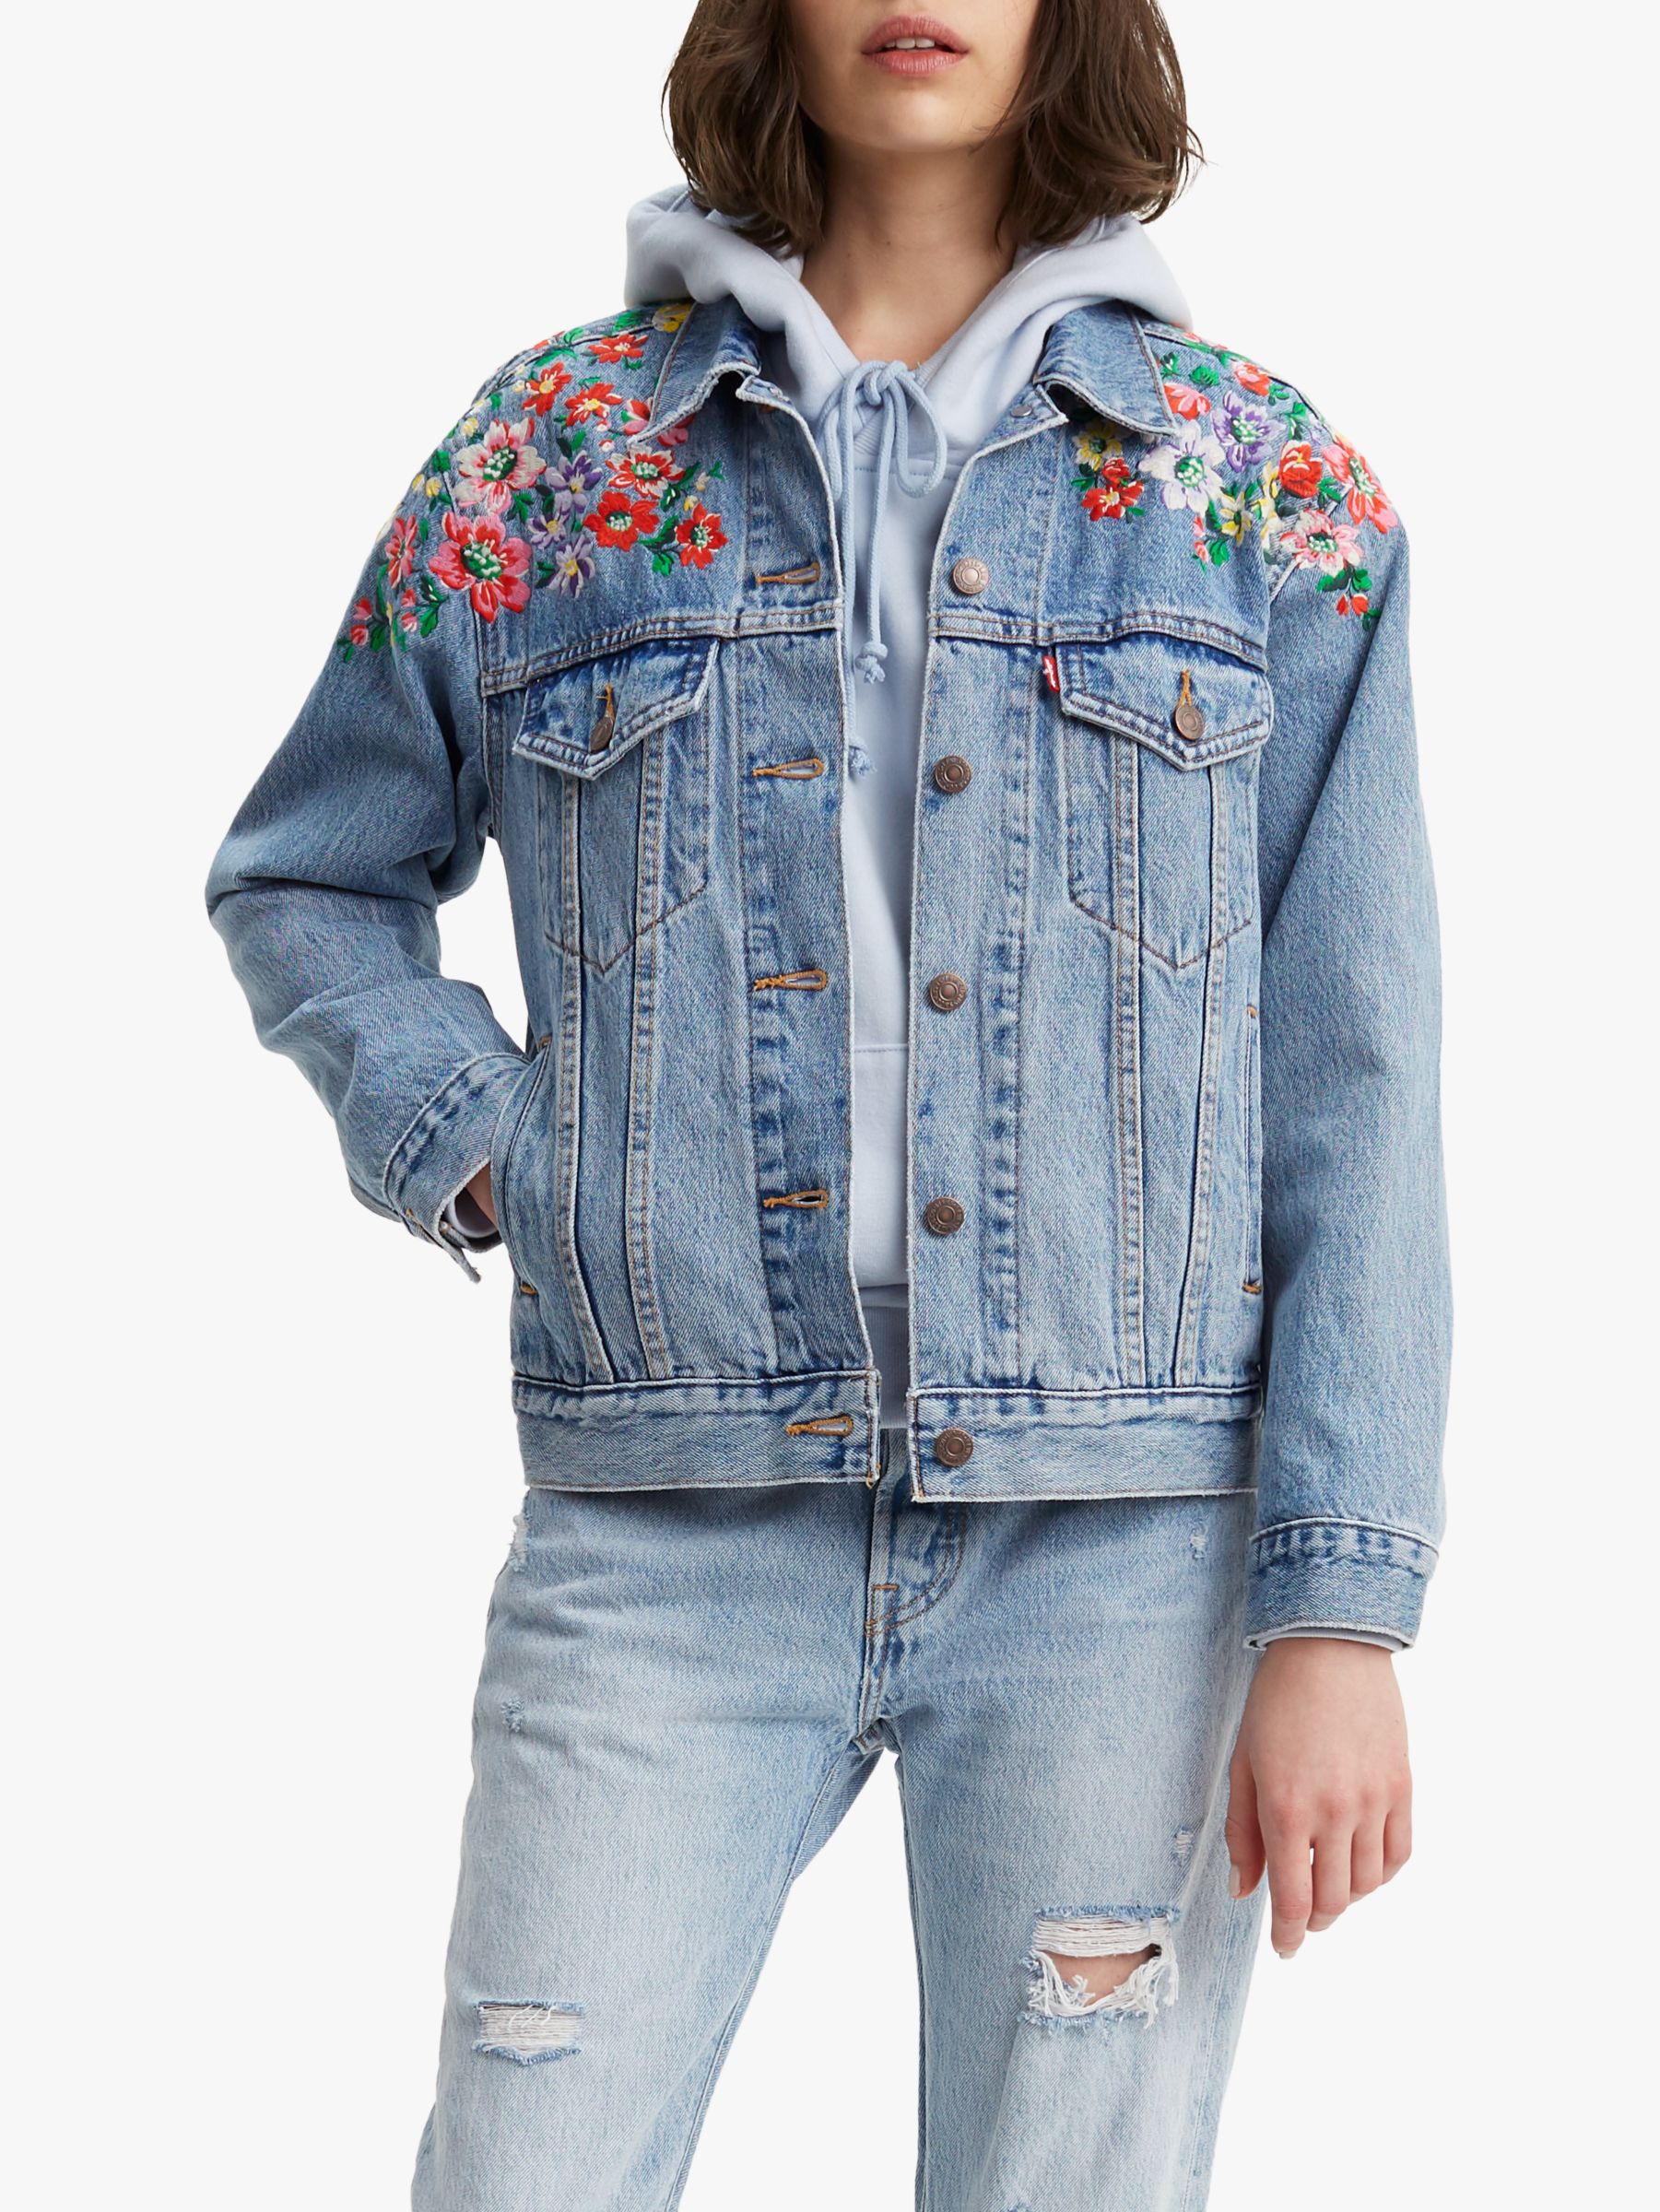 Top 85+ imagen levi’s embroidered jacket